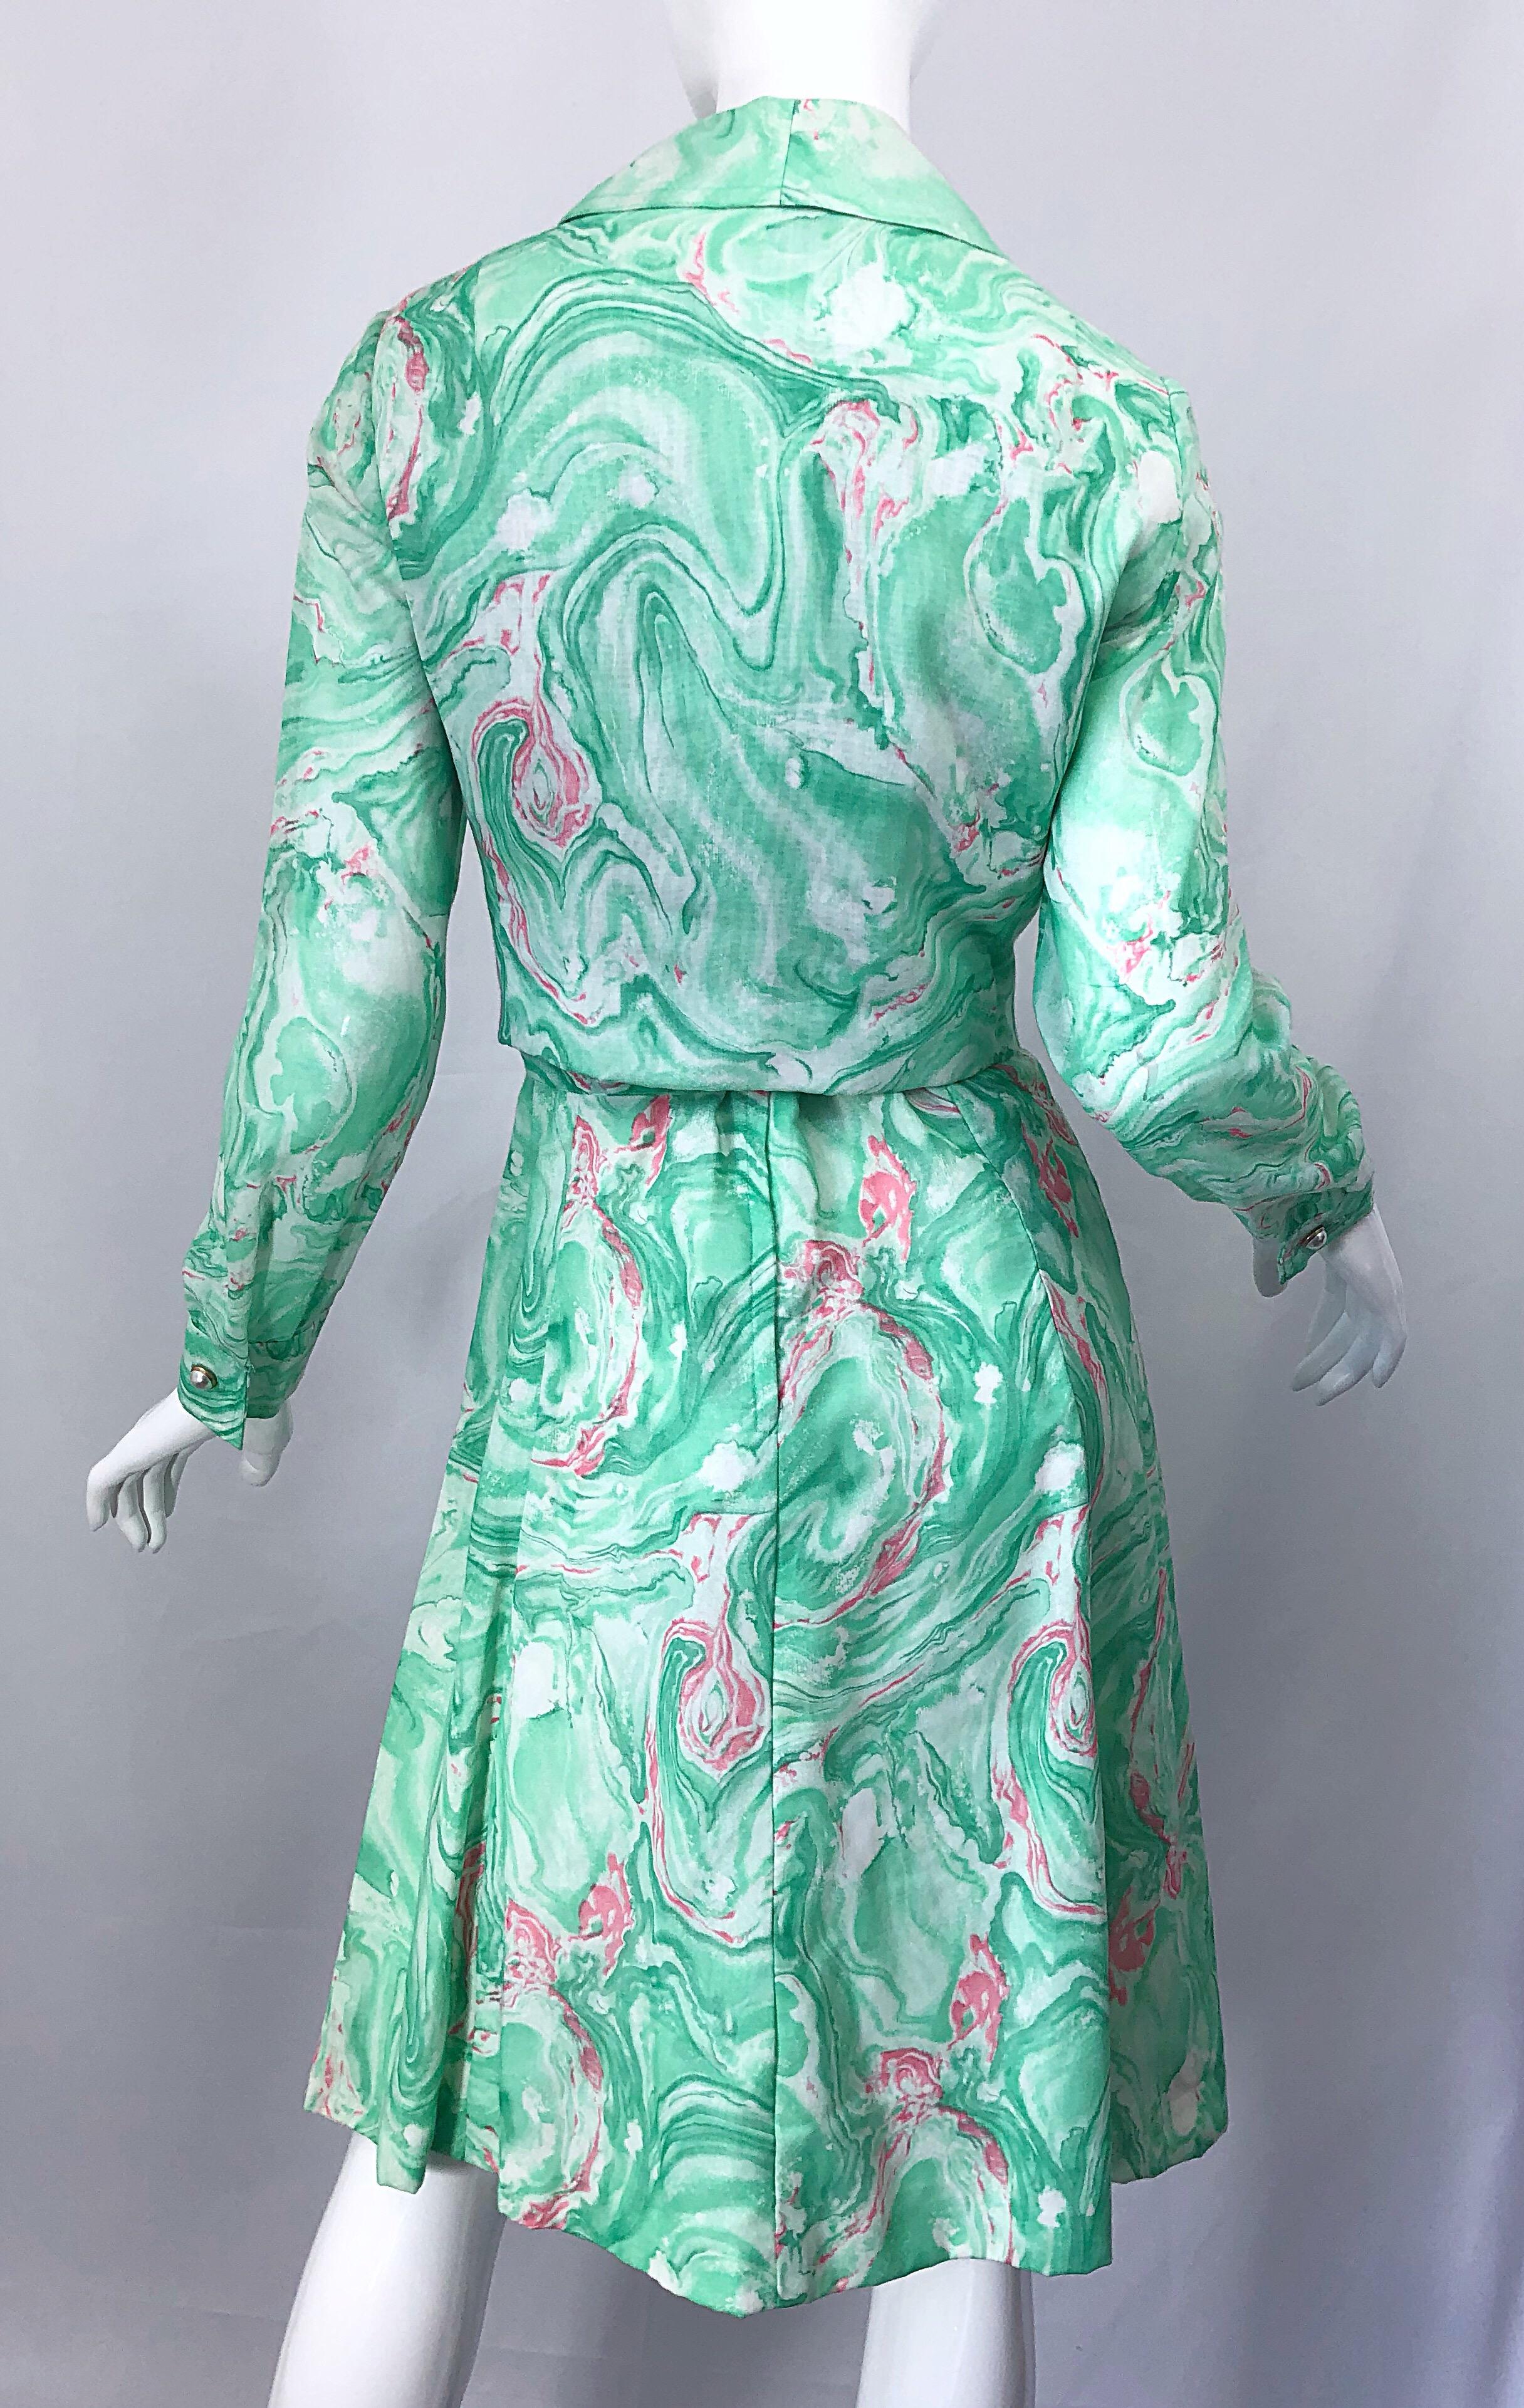 60s swirl dress